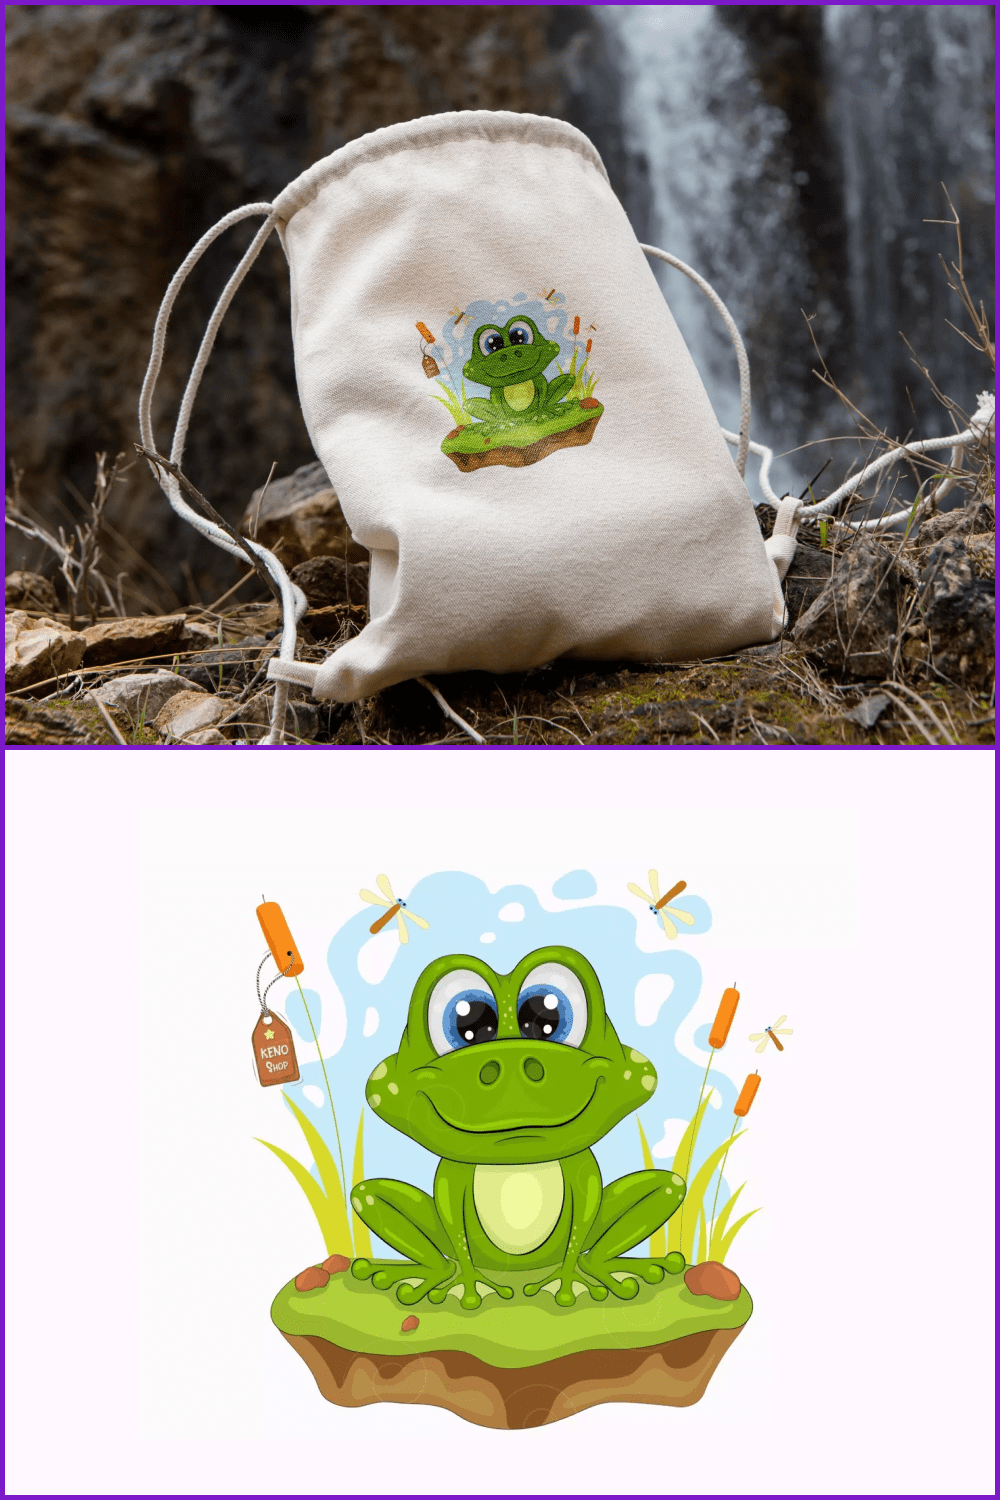 Cartoon Green Frog on the bagpack.